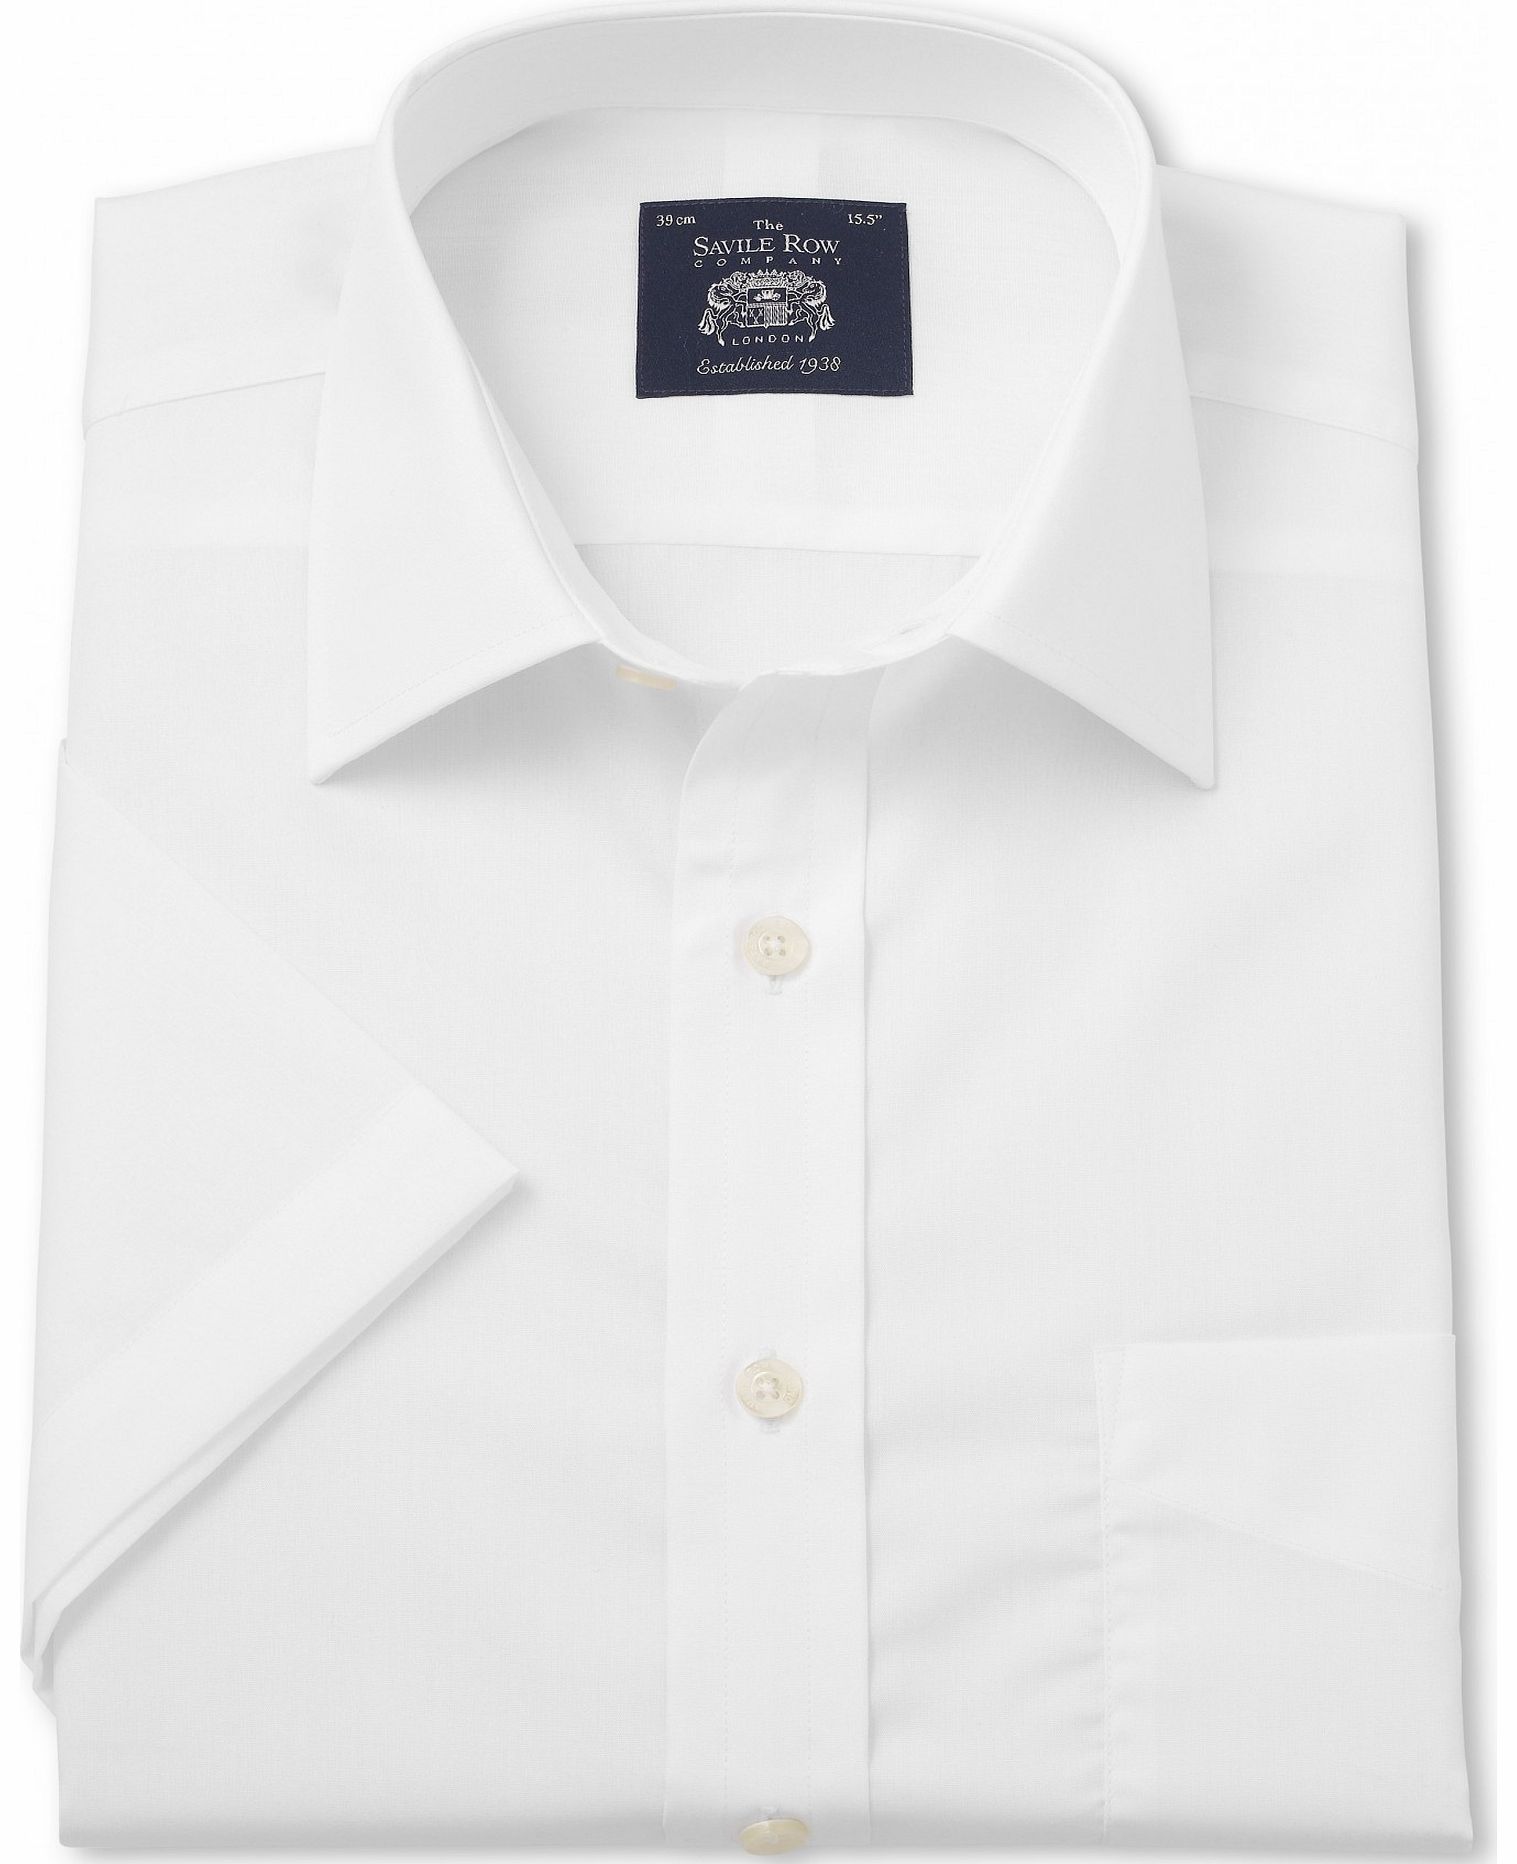 Savile Row Company White Poplin Classic Fit Short Sleeve Shirt 17